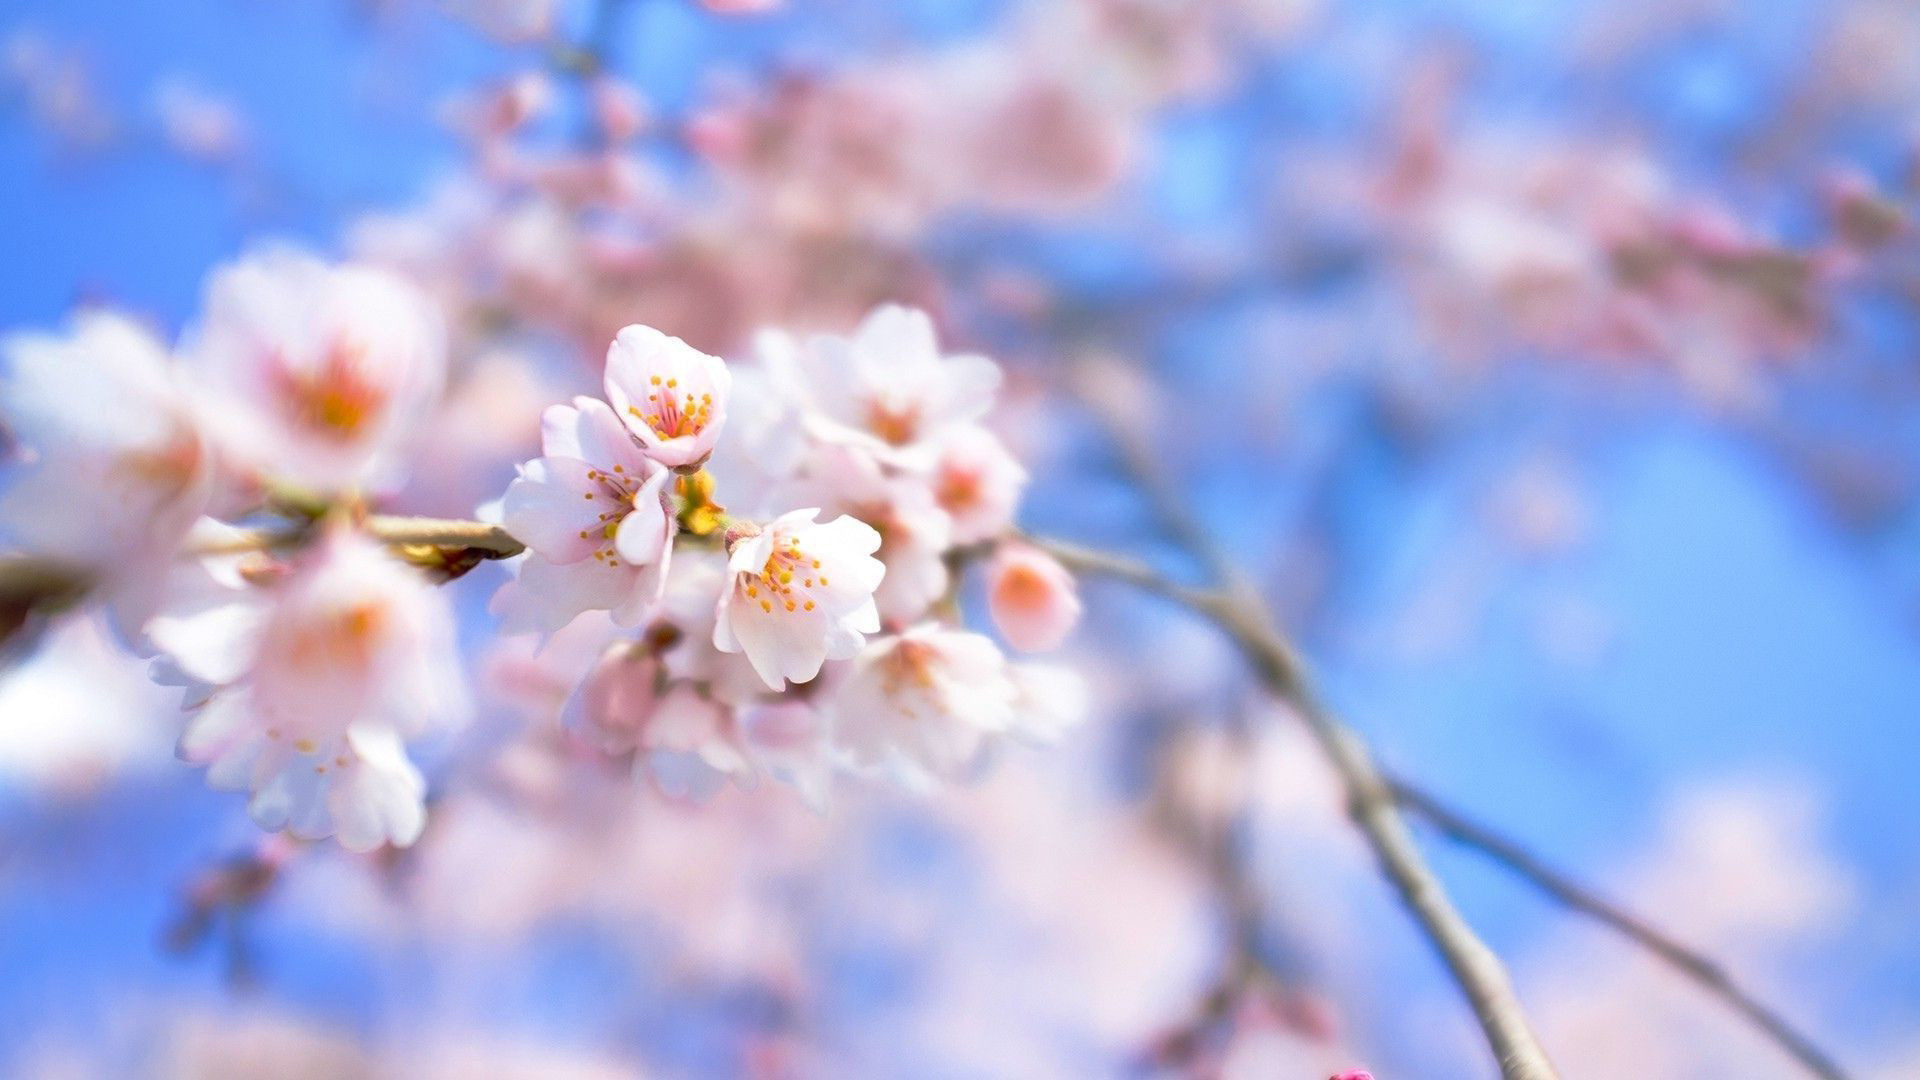 1920x1080 Cherry-blossom-flower-wallpapers.jpg (1920Ã1080) | Cheery blossoms | Sakura  | Pinterest | Wallpaper, Flower tree and Wallpaper backgrounds